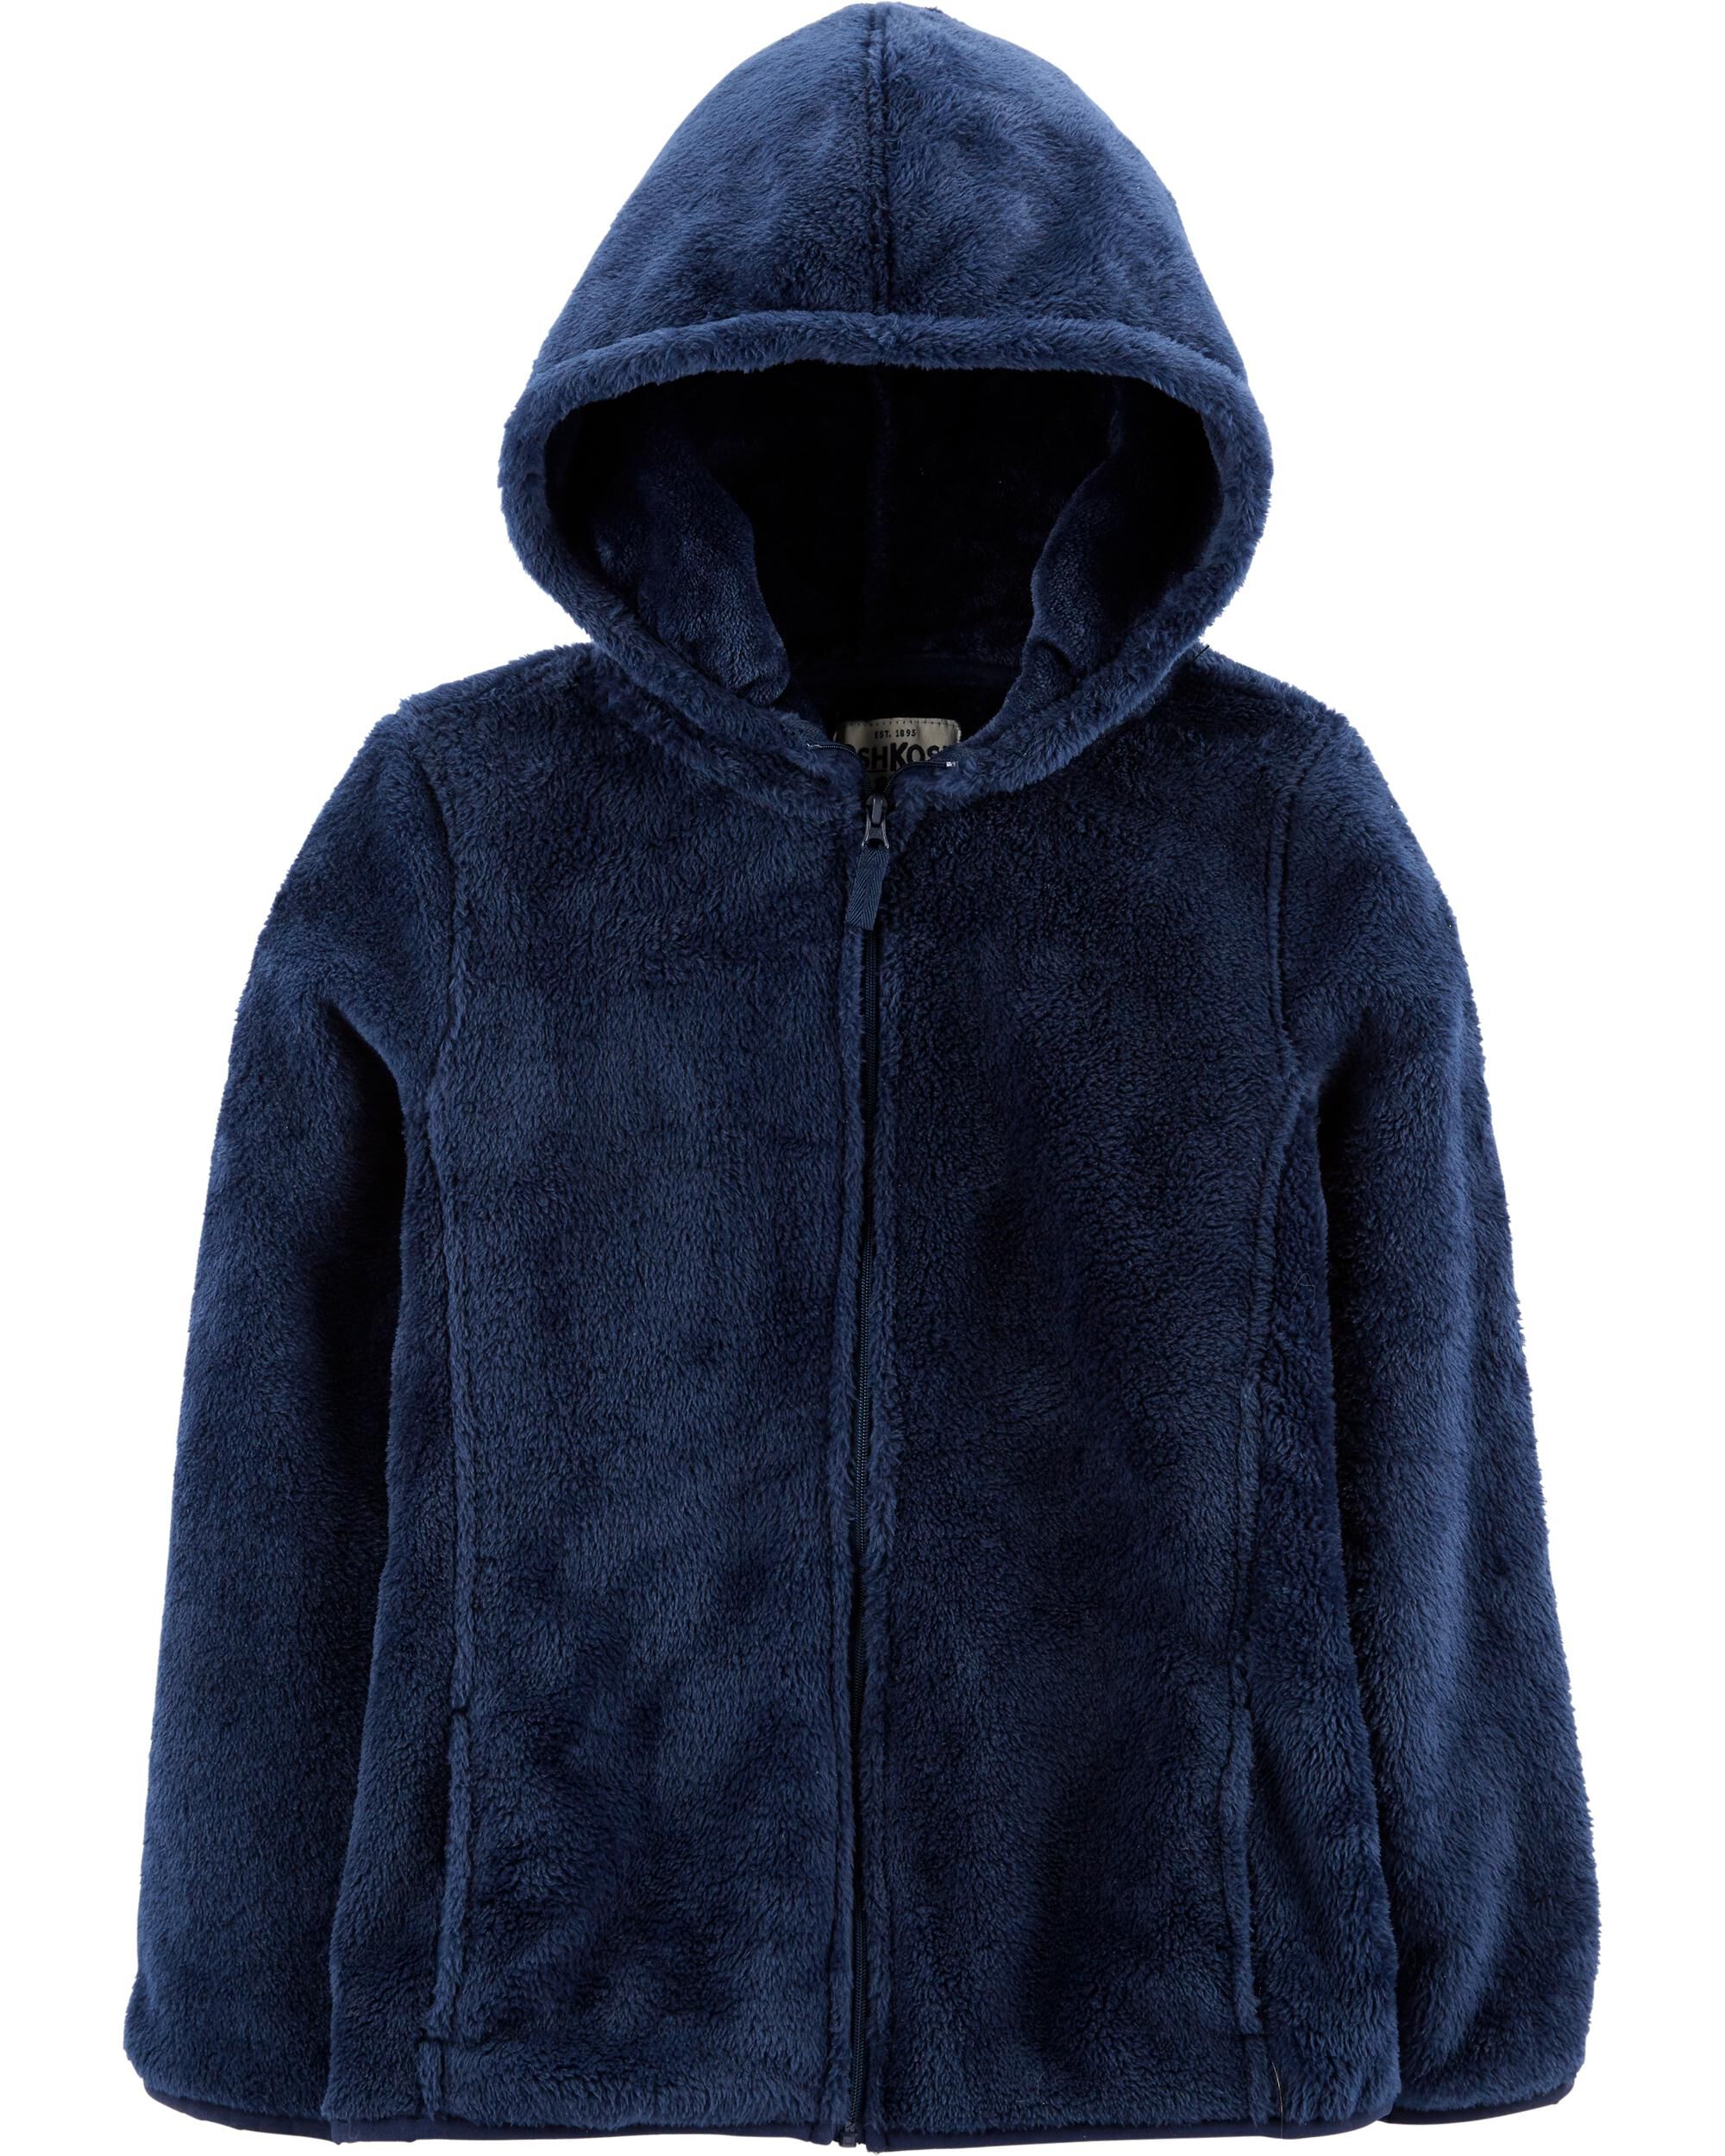 fuzzy blue hoodie